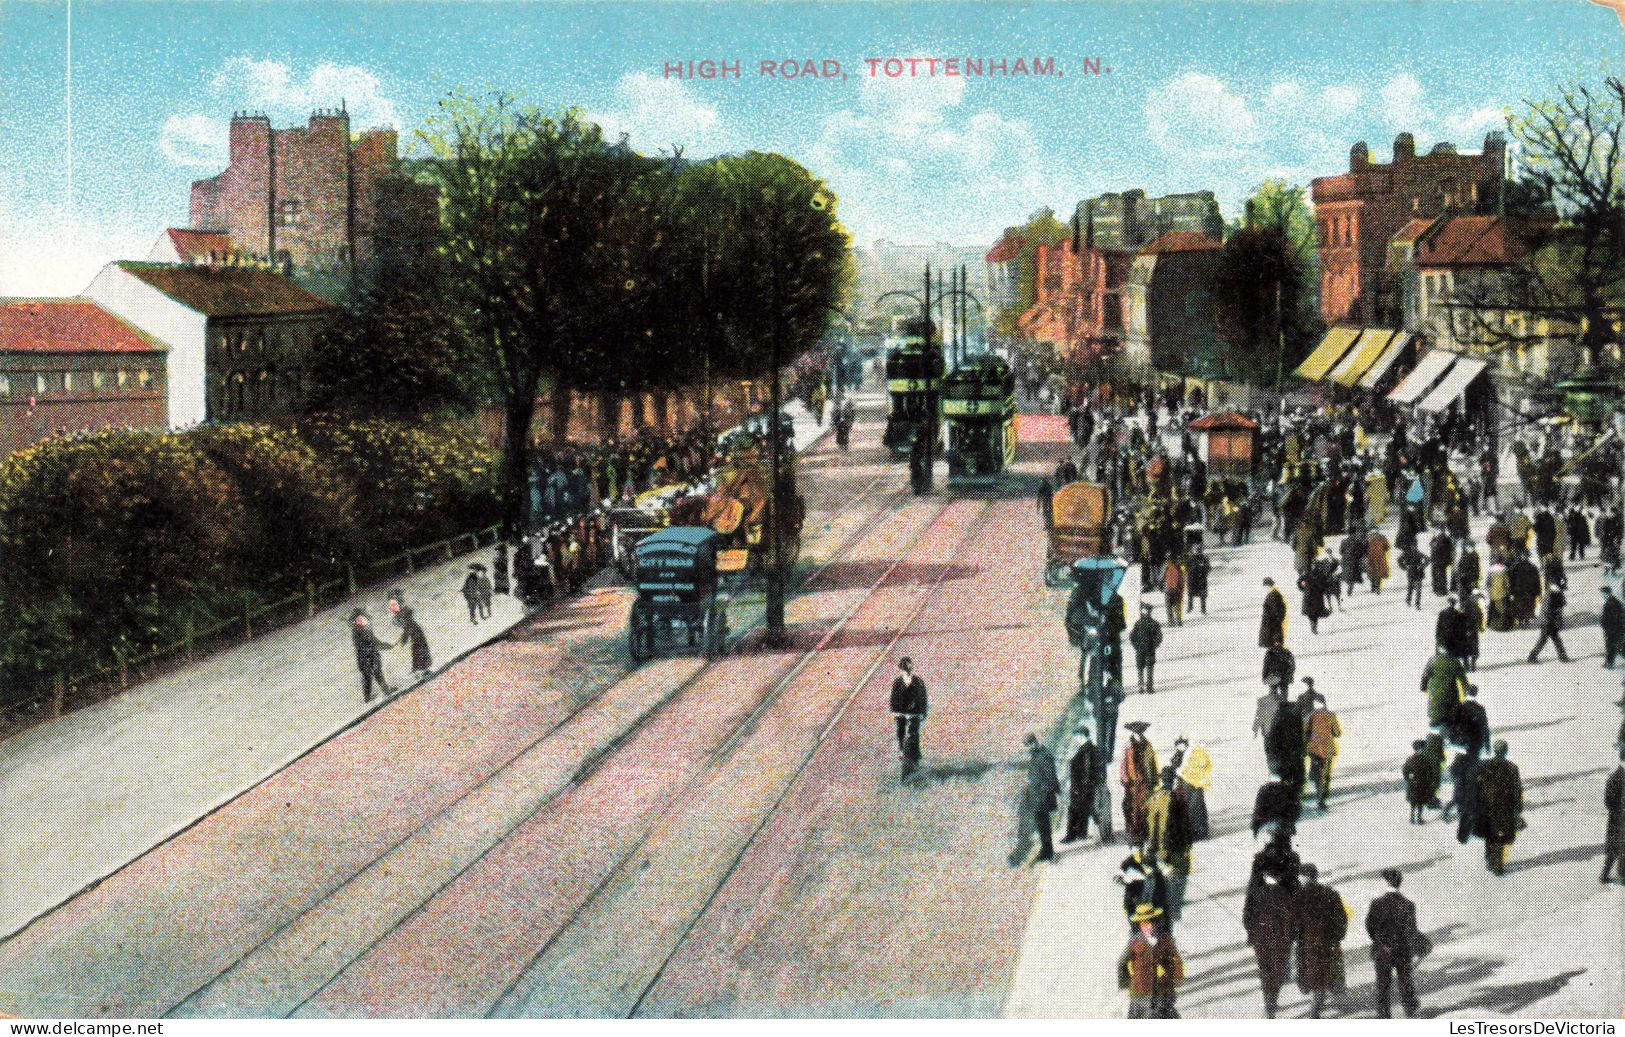 ROYAUME-UNI - Grand Londres - High Road Tootenham, N. - Tramway - Animé - Colorisé - Carte Postale Ancienne - Middlesex